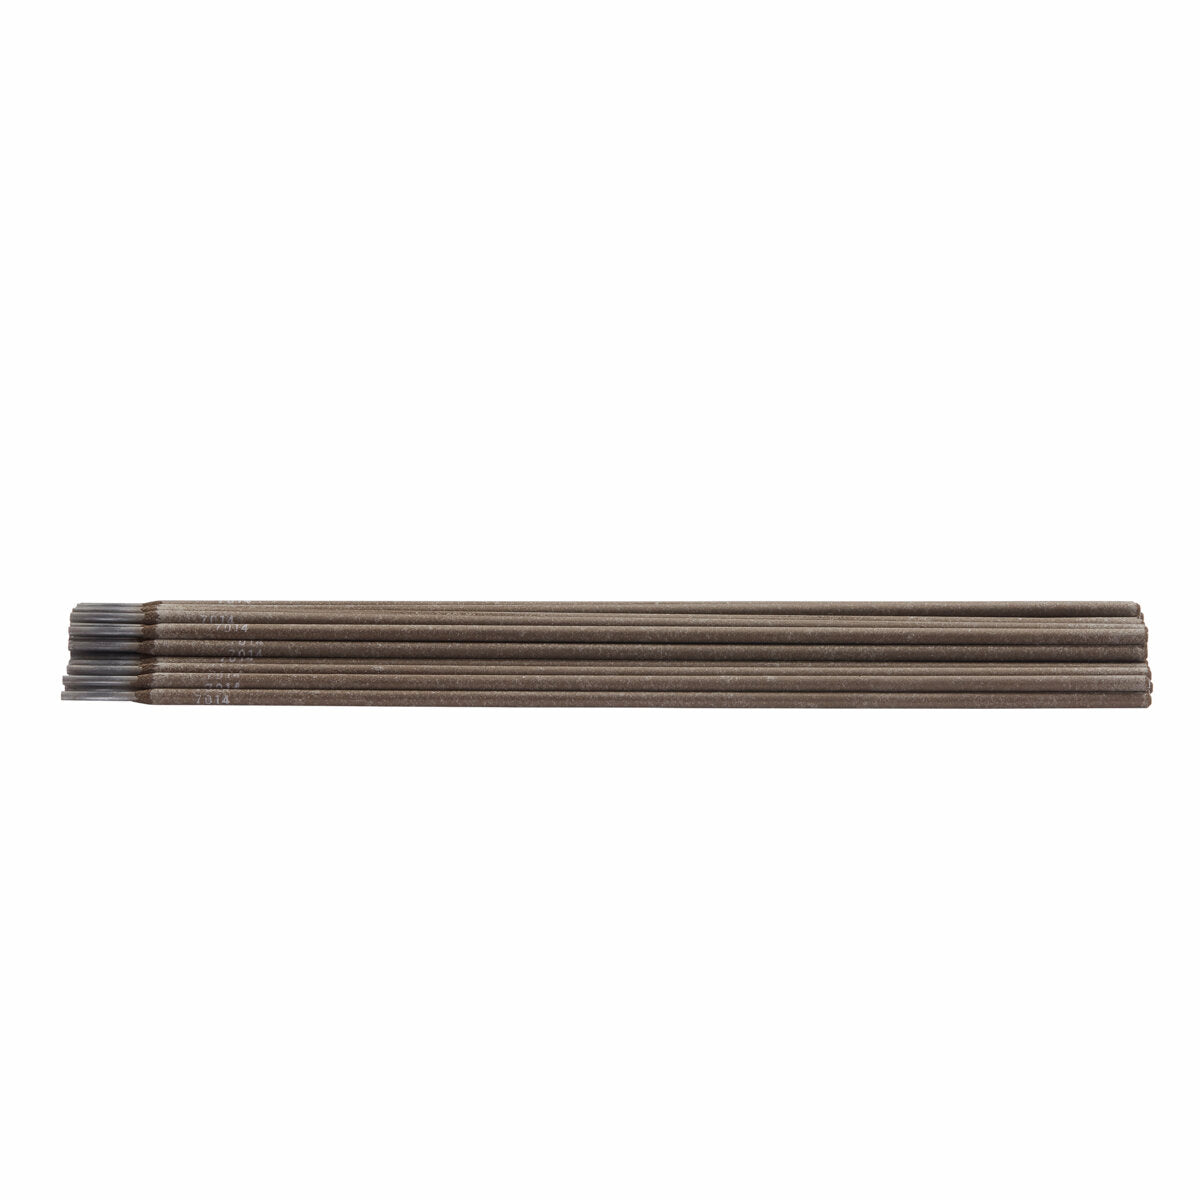 Lincoln Electric - Murex® 7014 Stick (SMAW) Electrode, 1/8x14 in, 50 lb Carton - EDM13181414